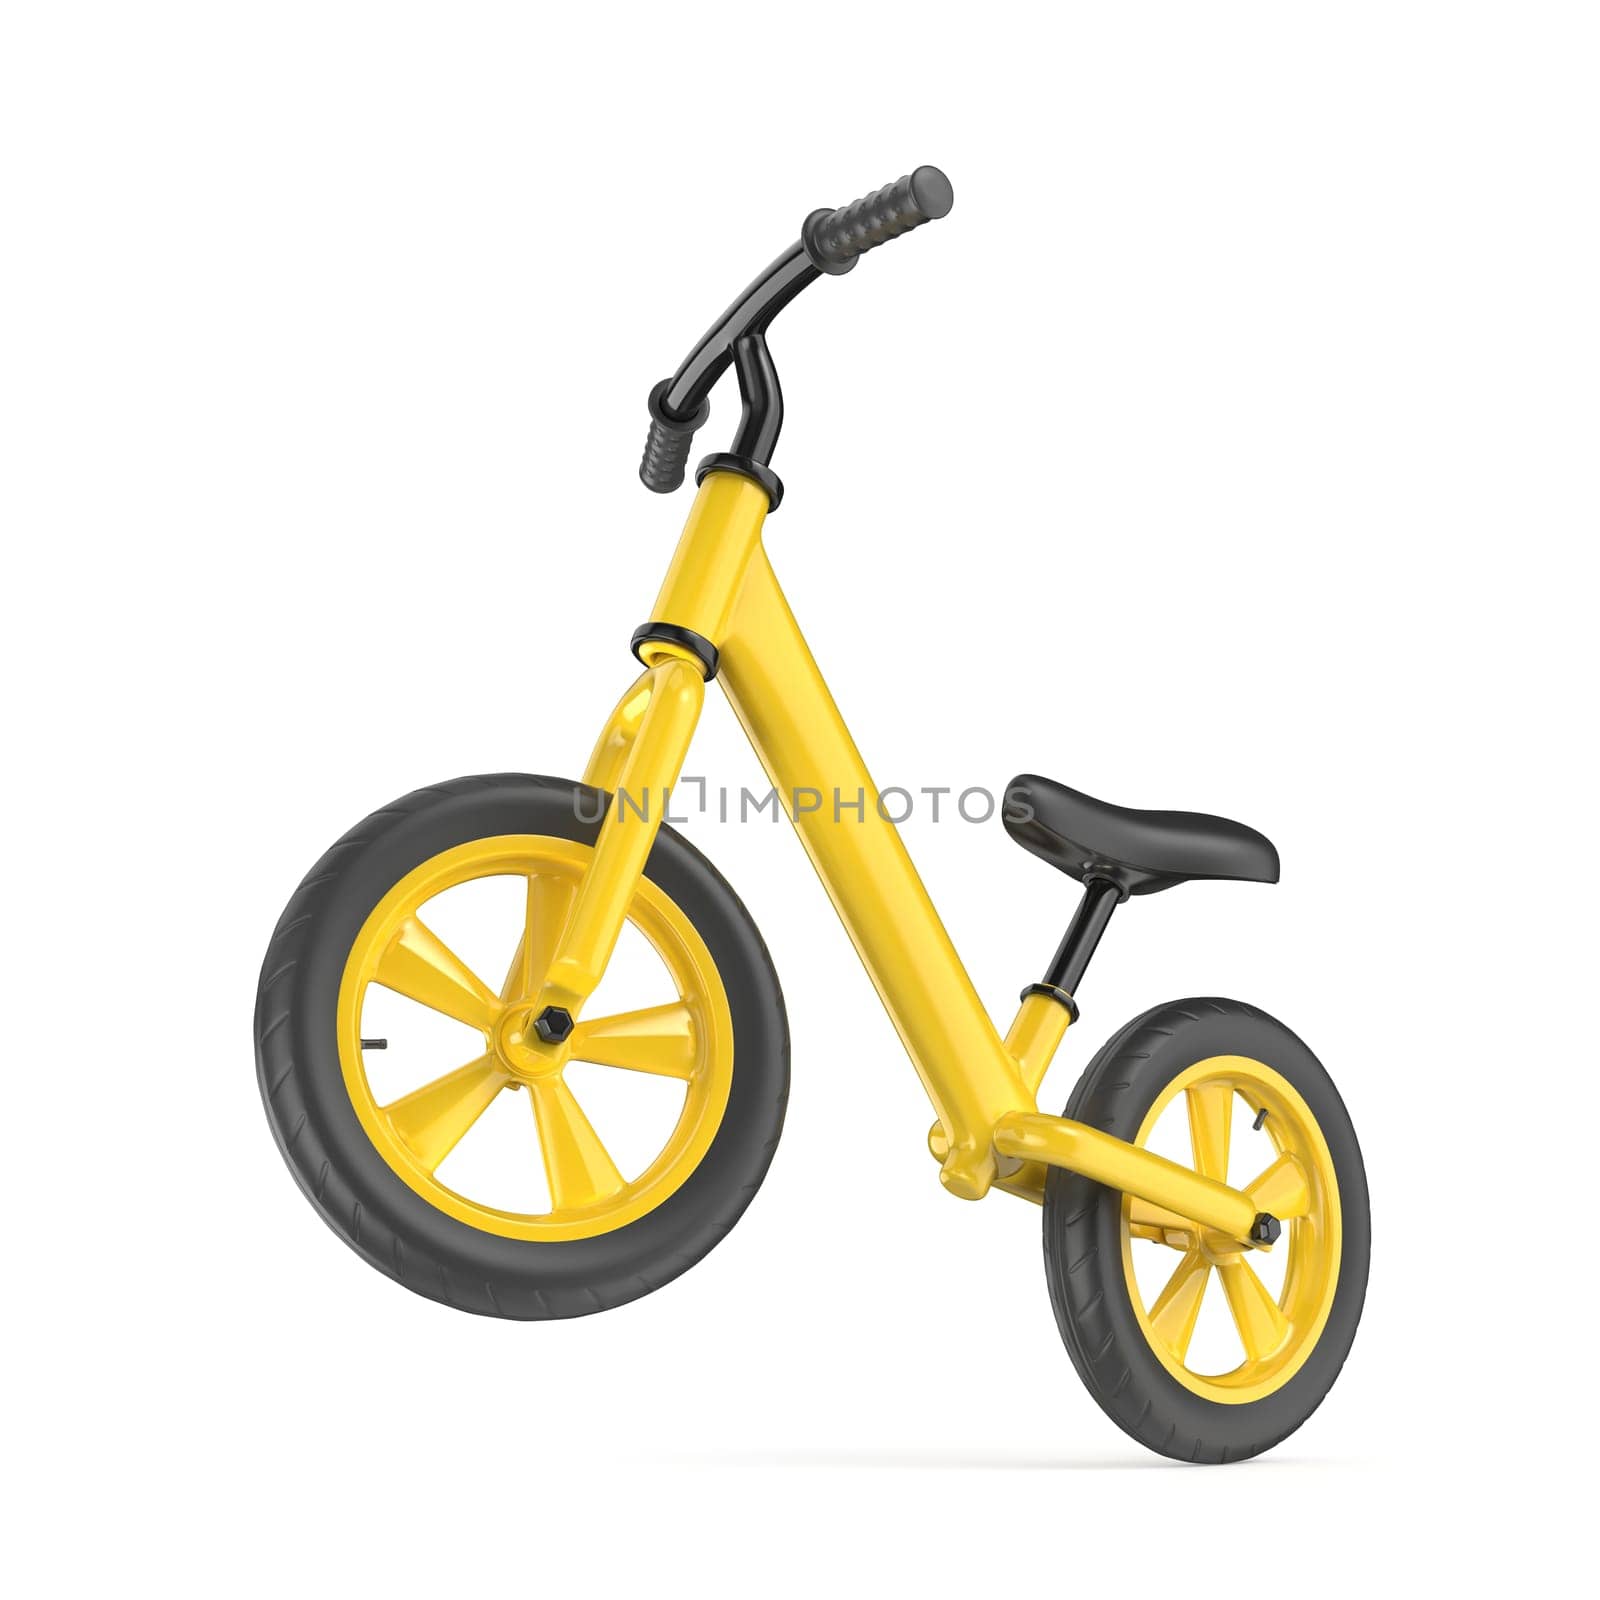 Yellow balance bike on white background
